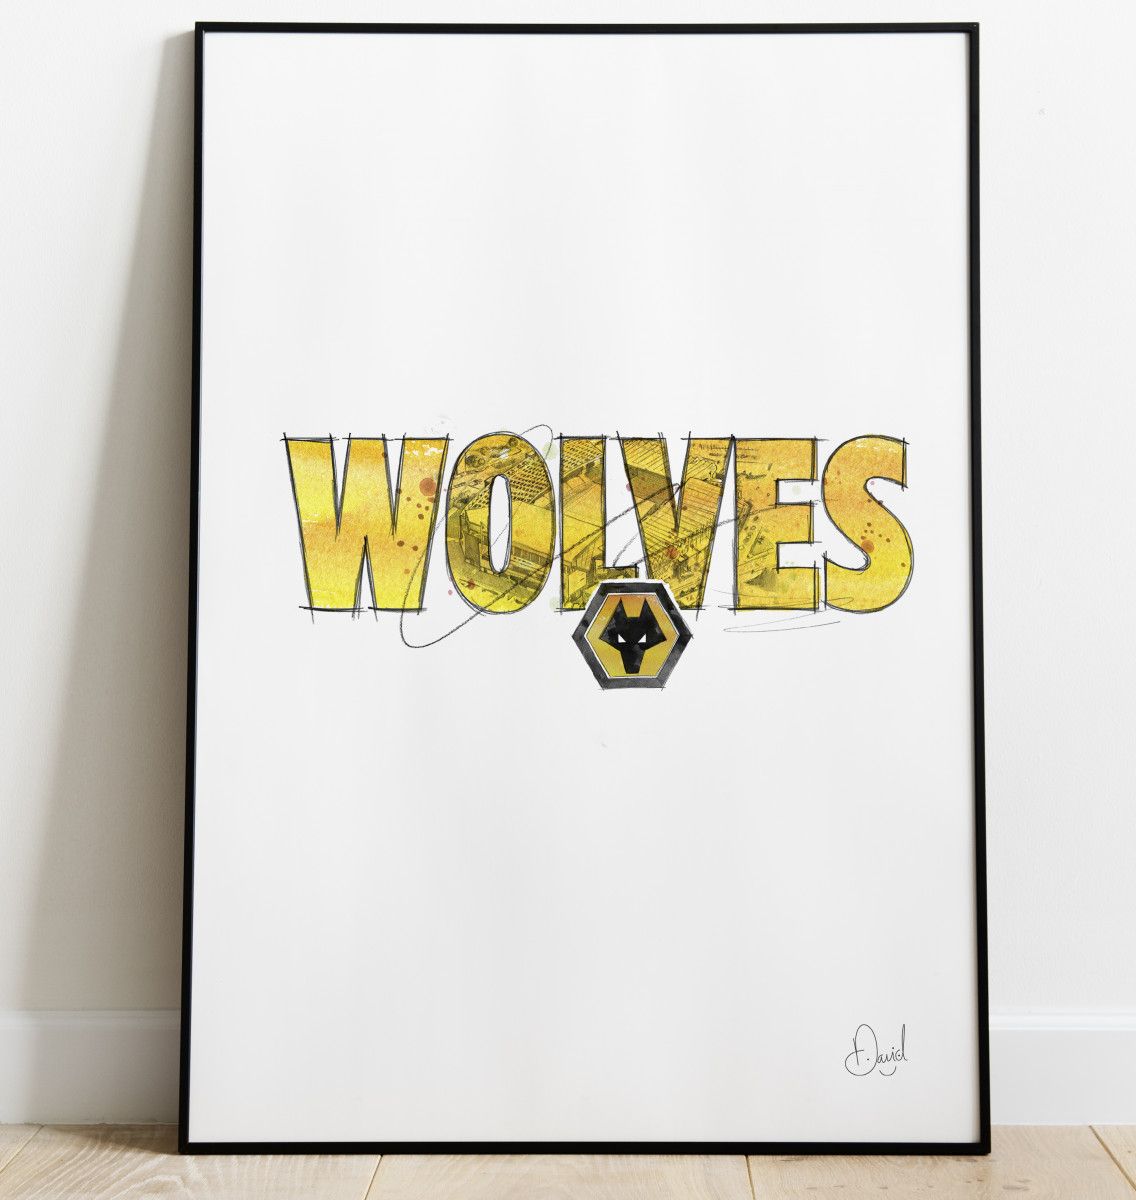 00306 Wolverhampton Wanderers Wolves Web